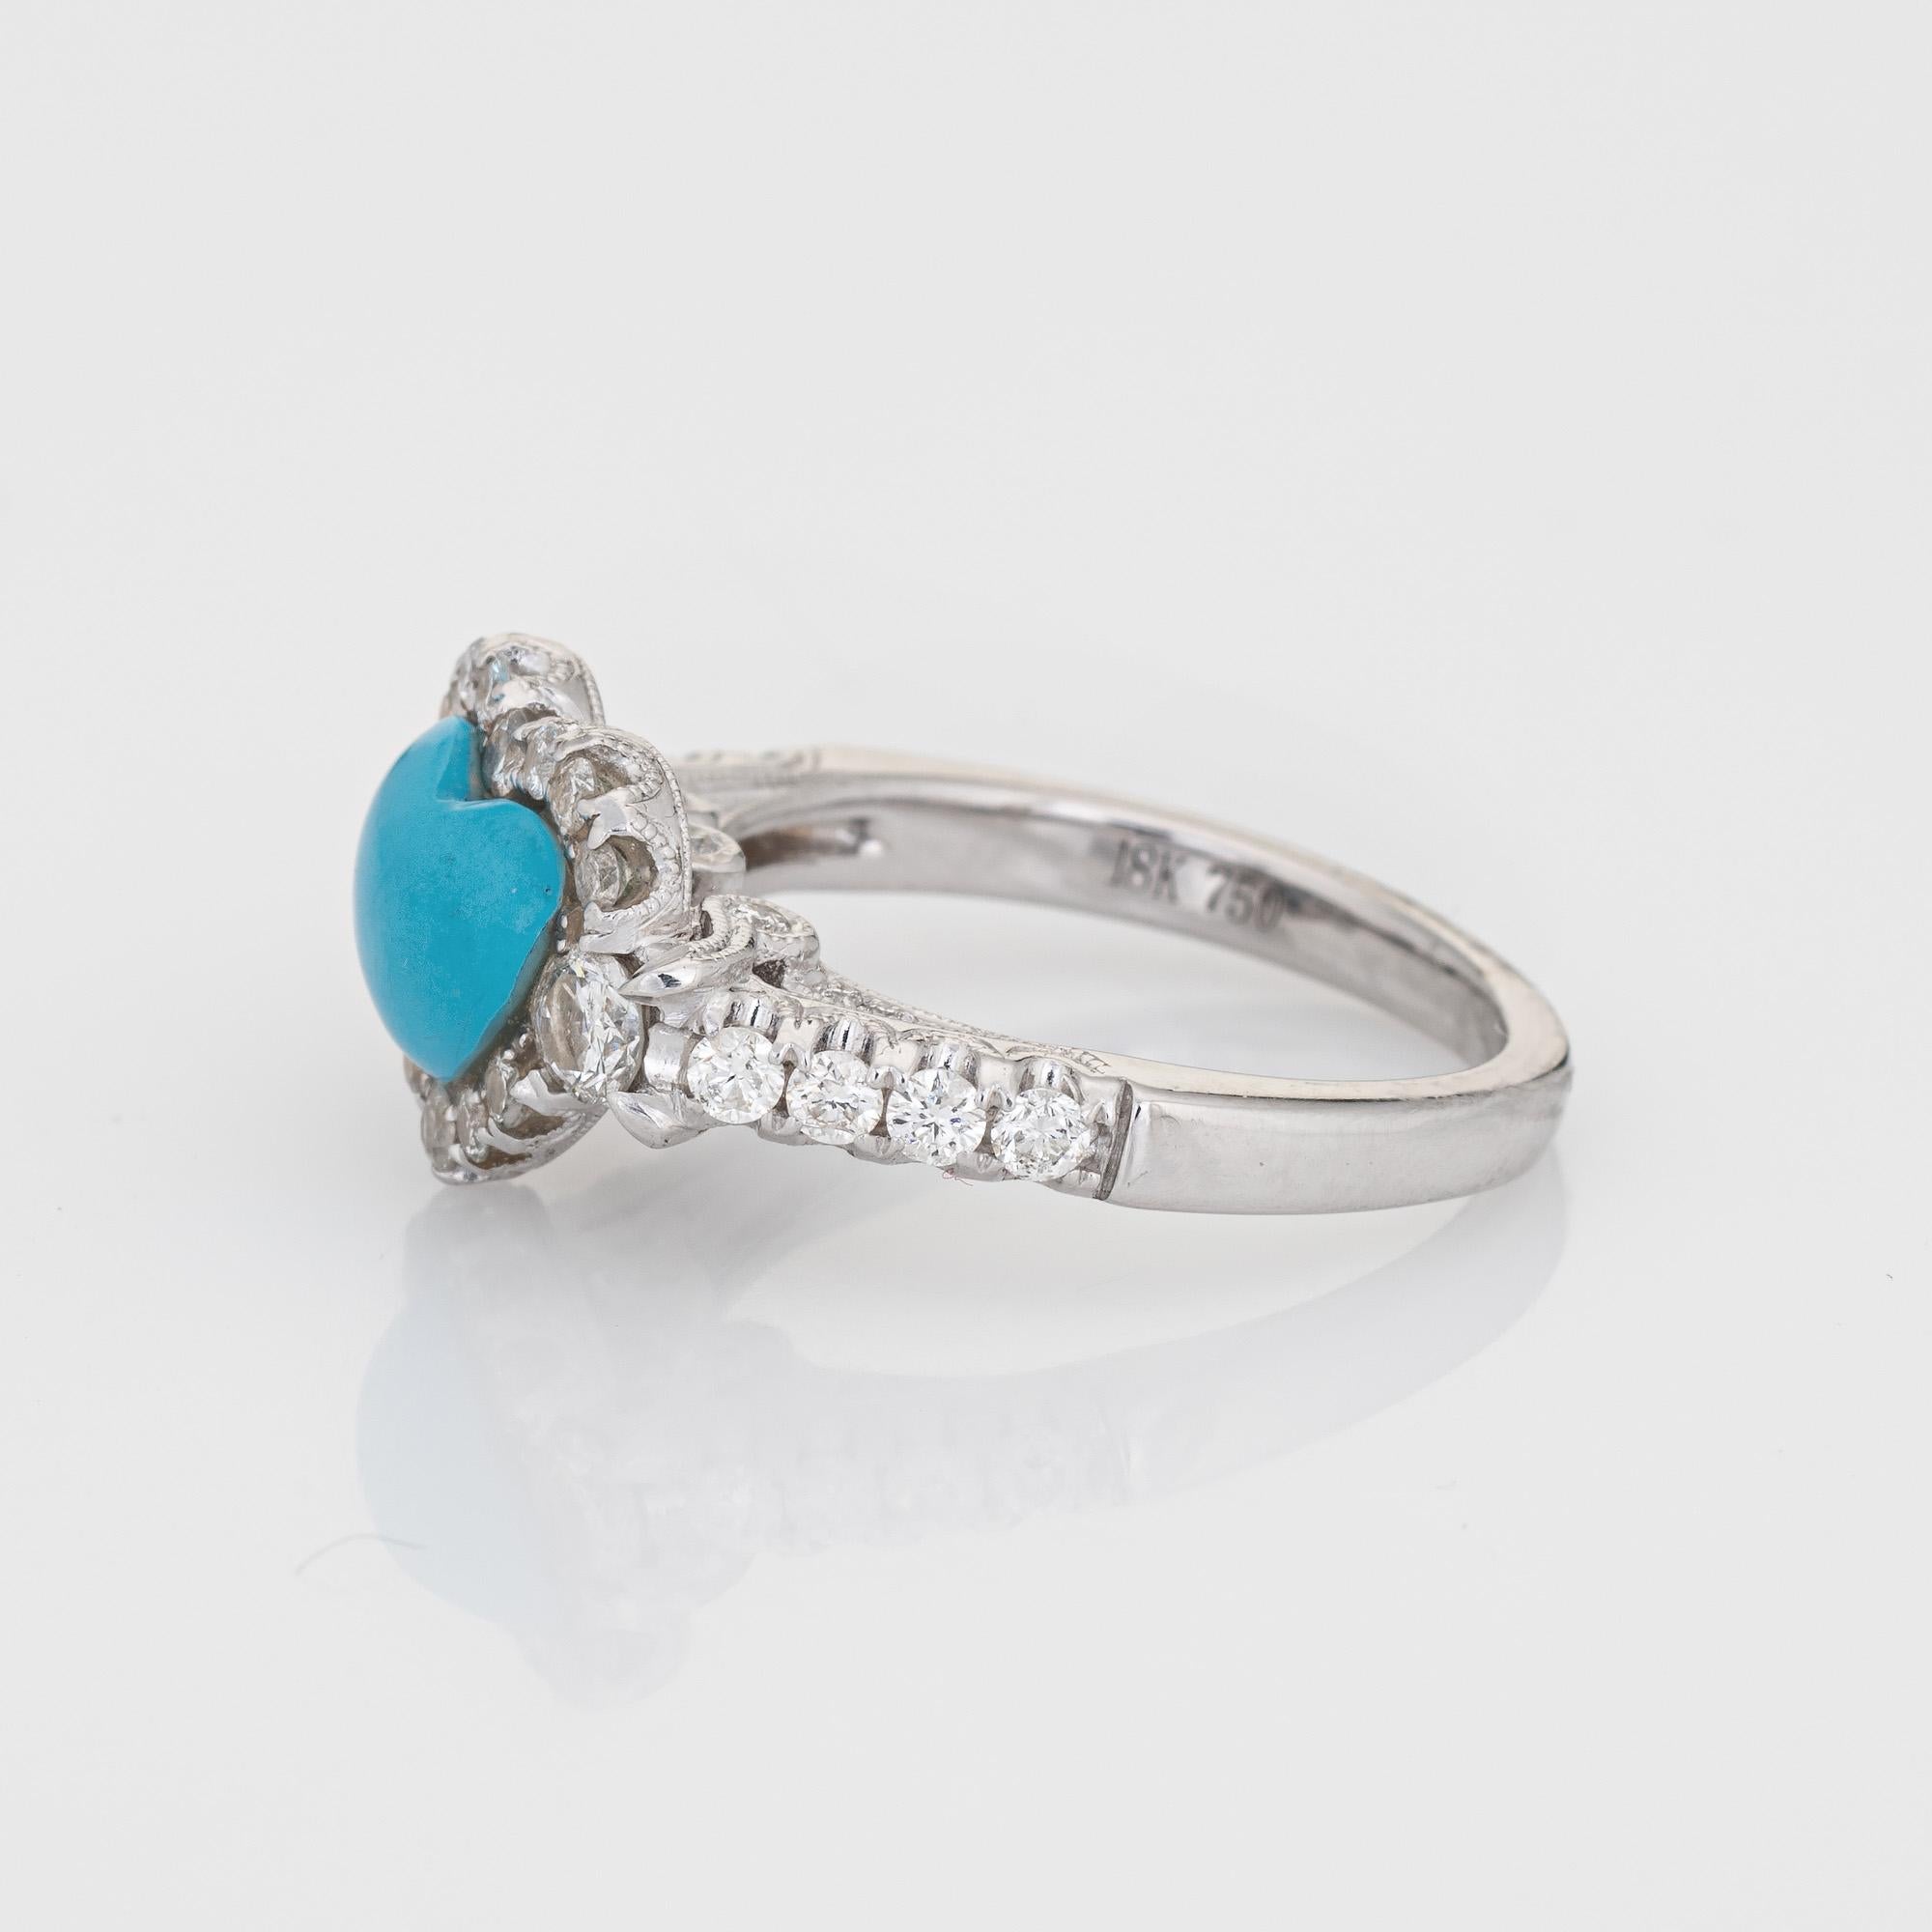 Modern Turquoise Heart Ring 1ct Diamond Estate 18k White Gold Fine Love Jewelry